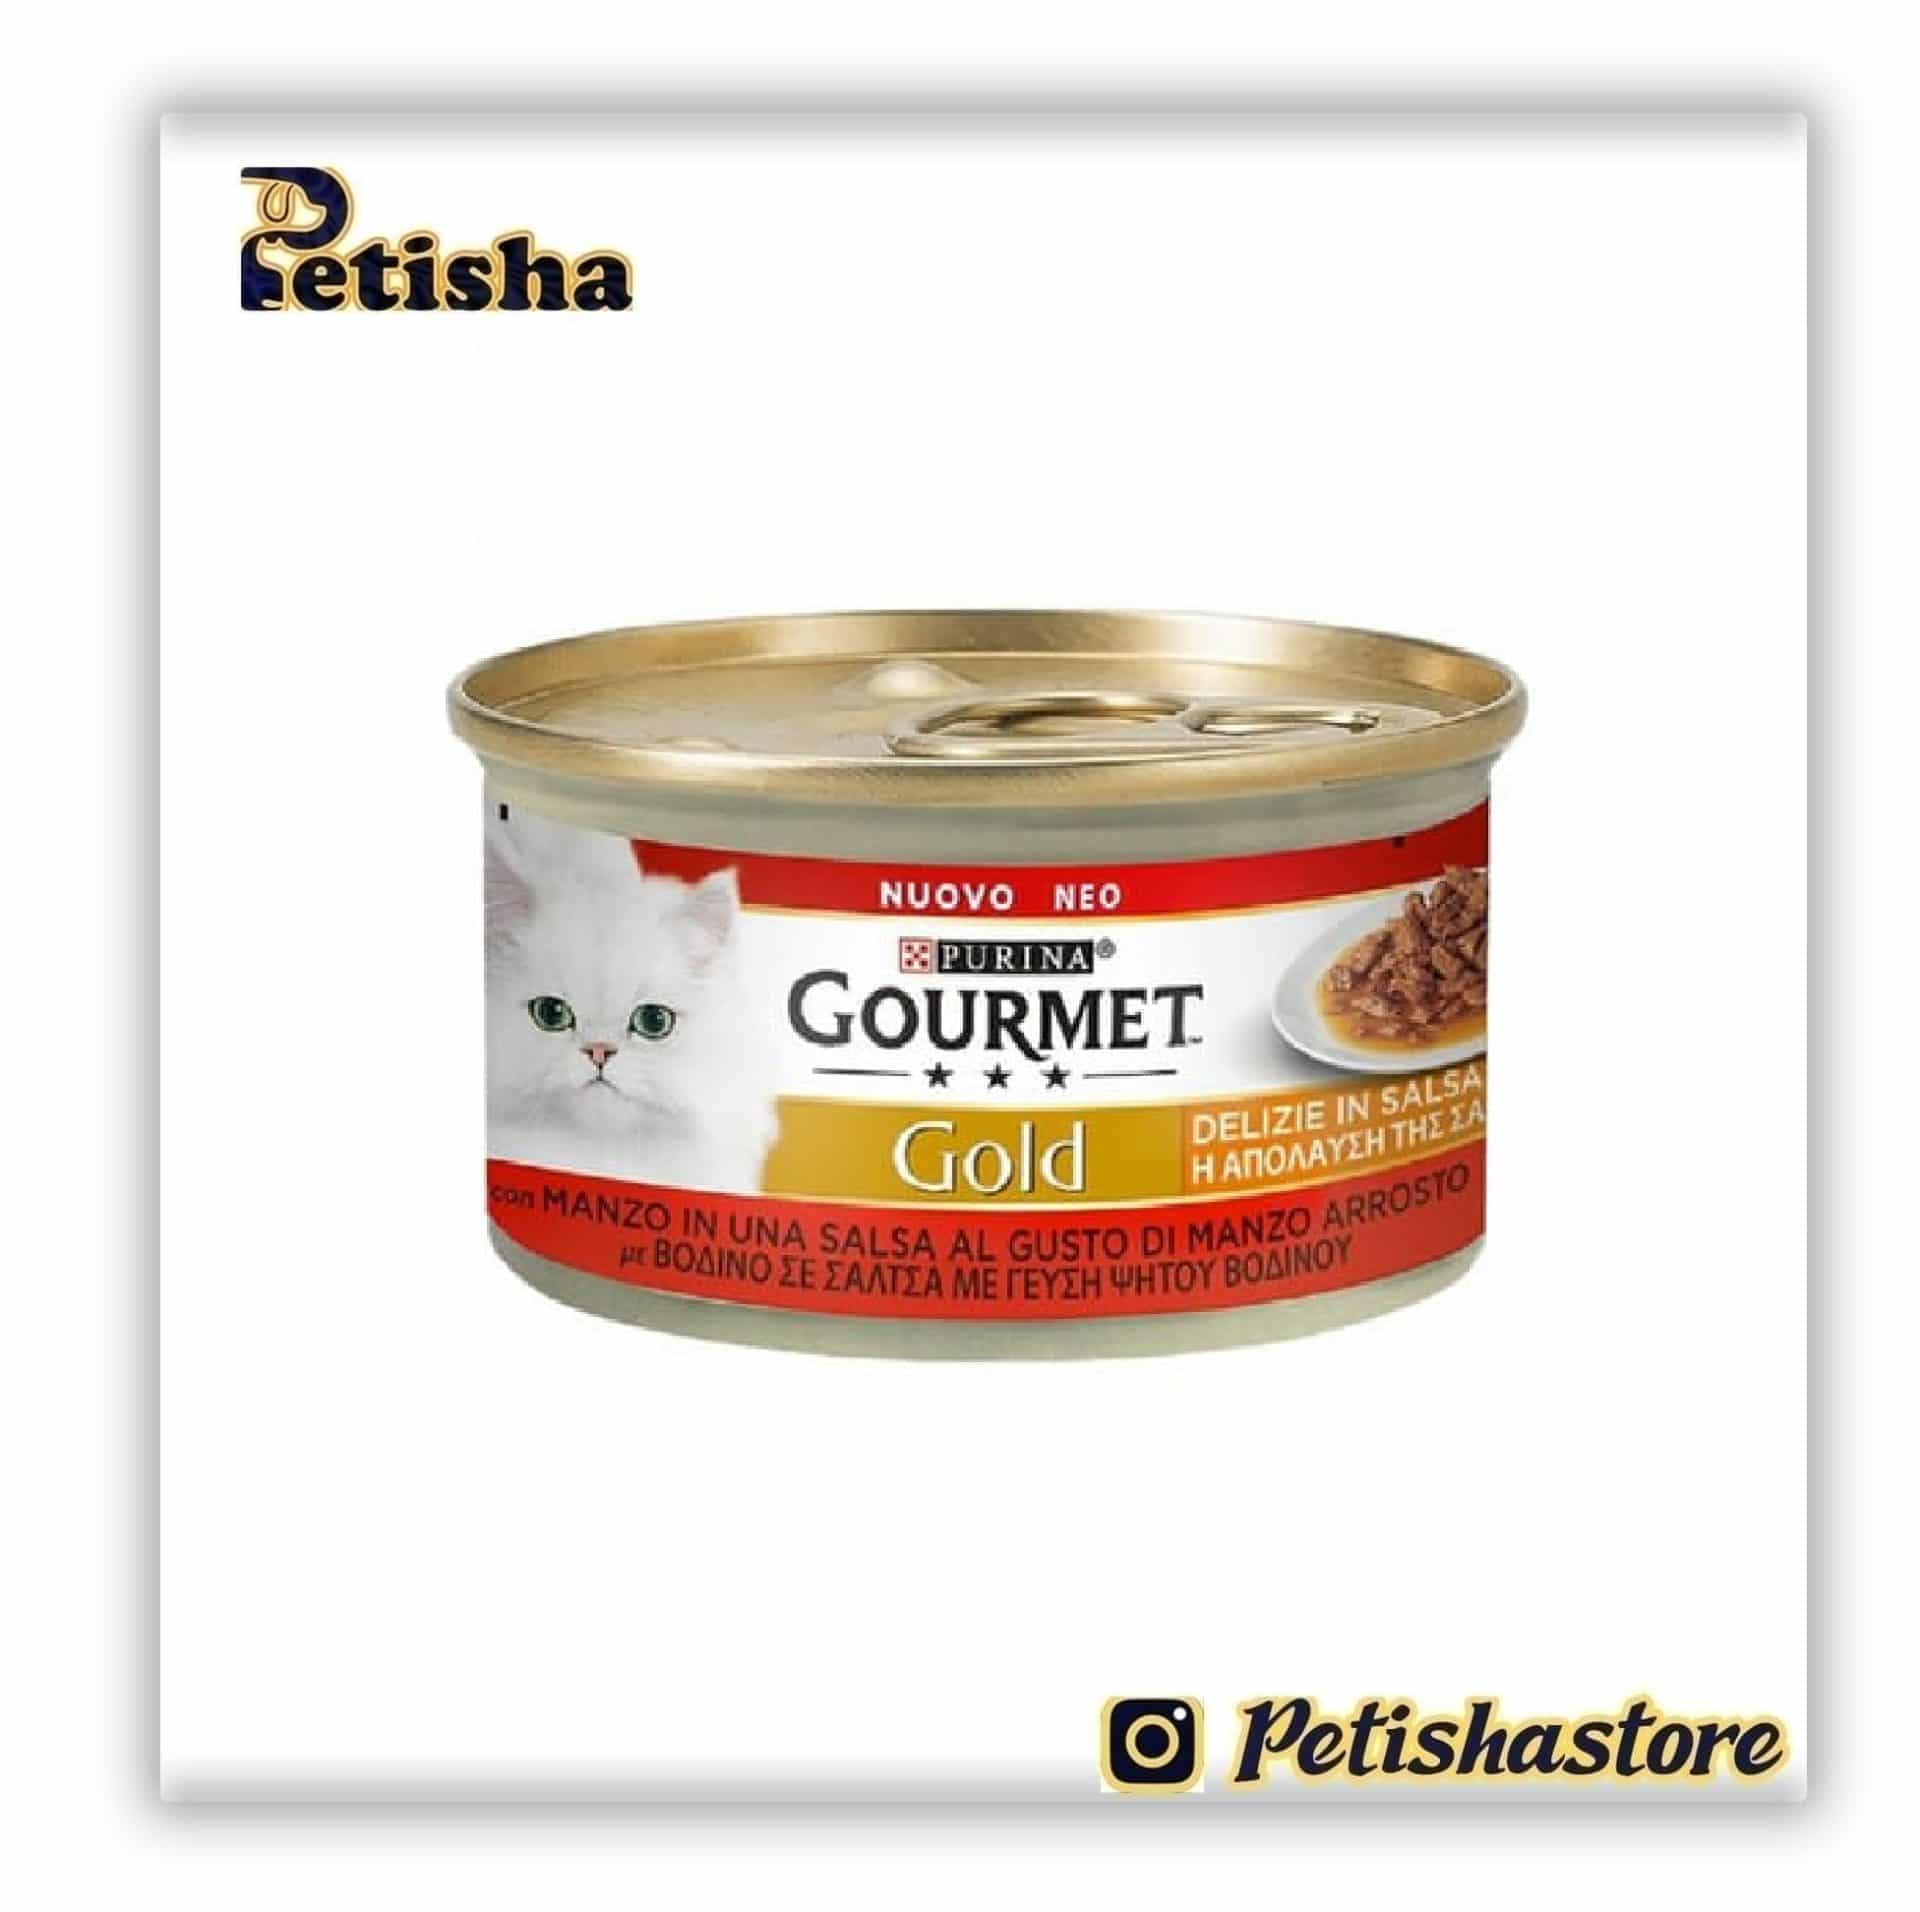 کنسرو گربه گورمت Gourmet گلد با طعم گوشت گوساله وزن 85 گرم